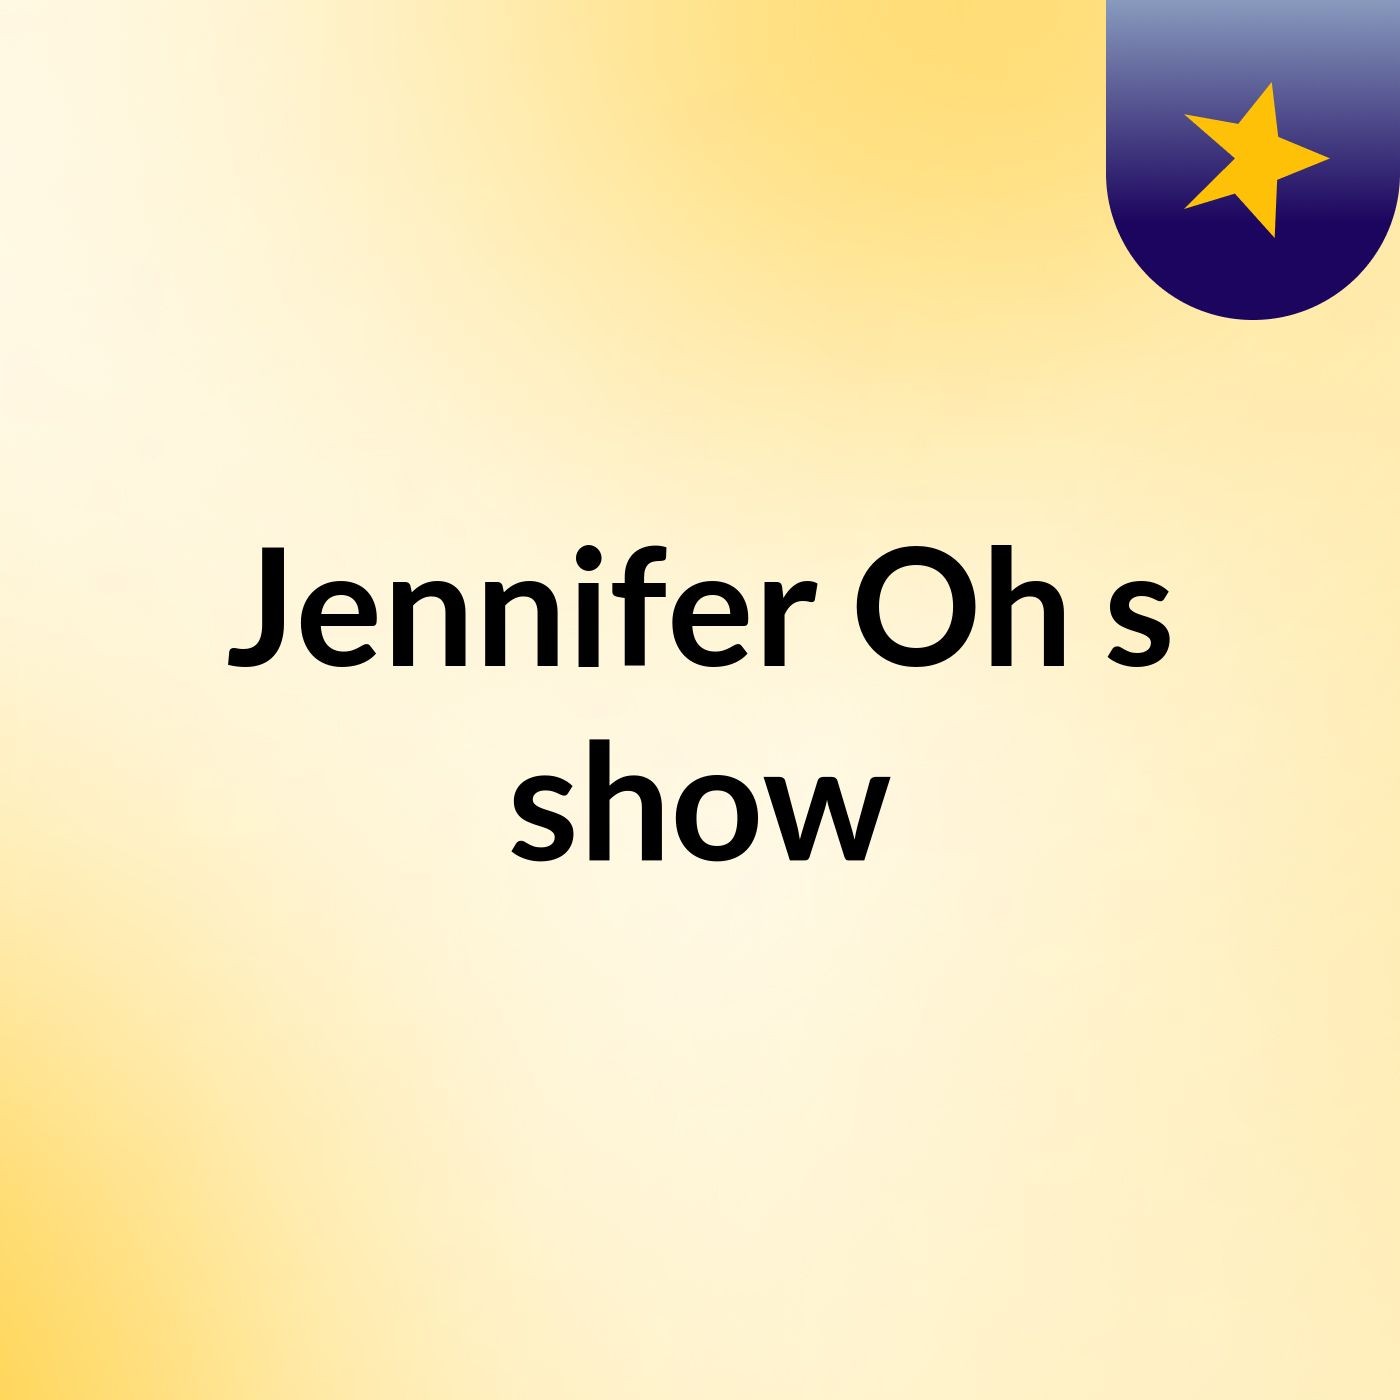 Jennifer Oh's show